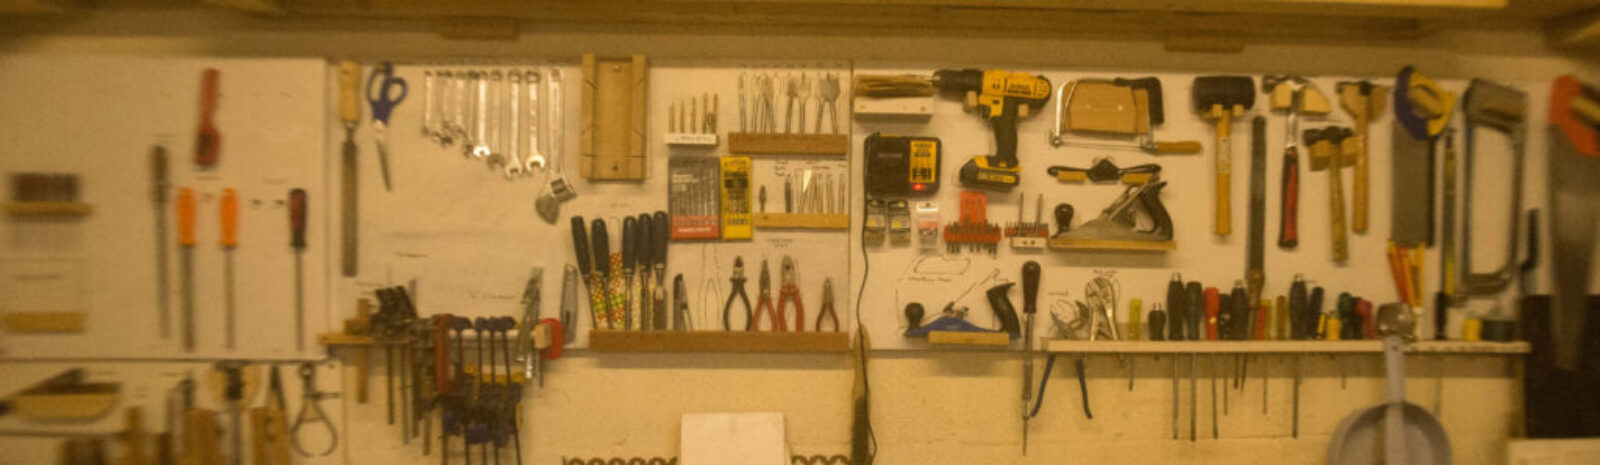 Hand tools comp 387kb